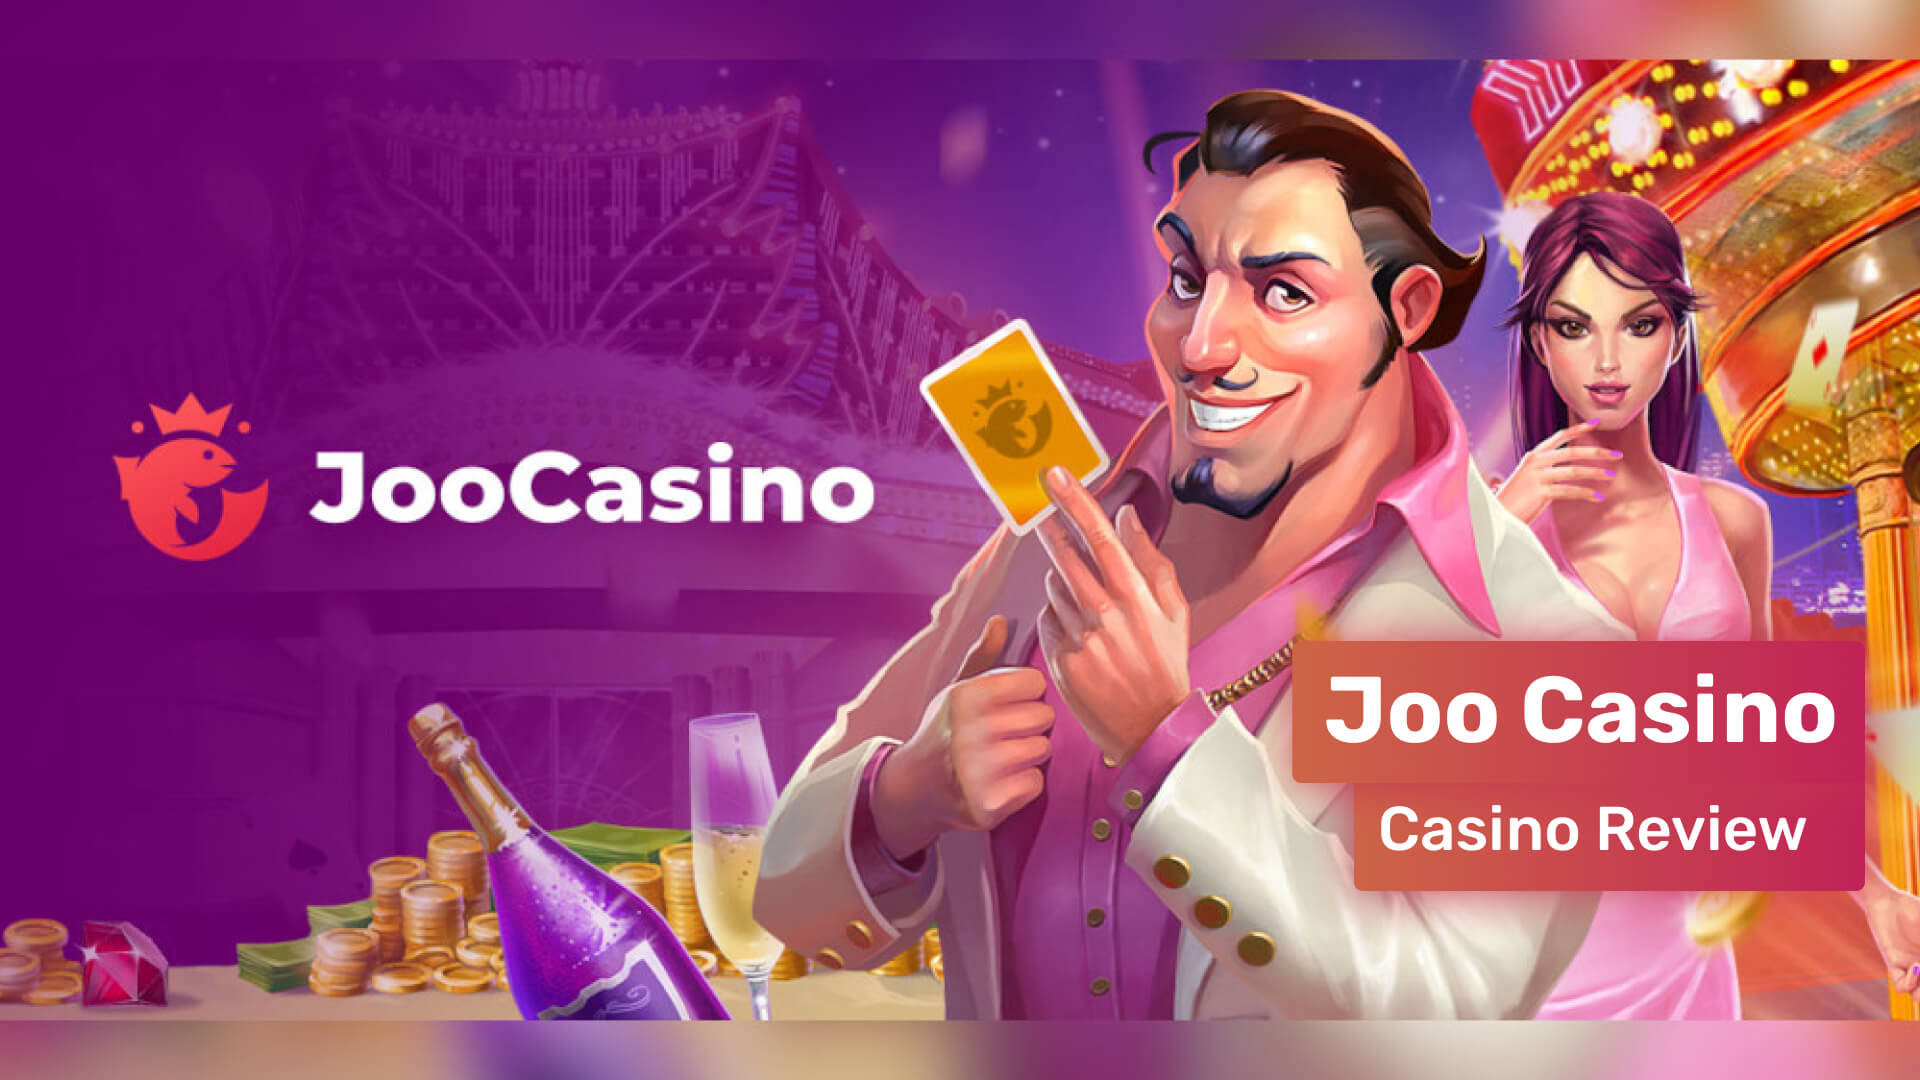 Joo Casino casino review